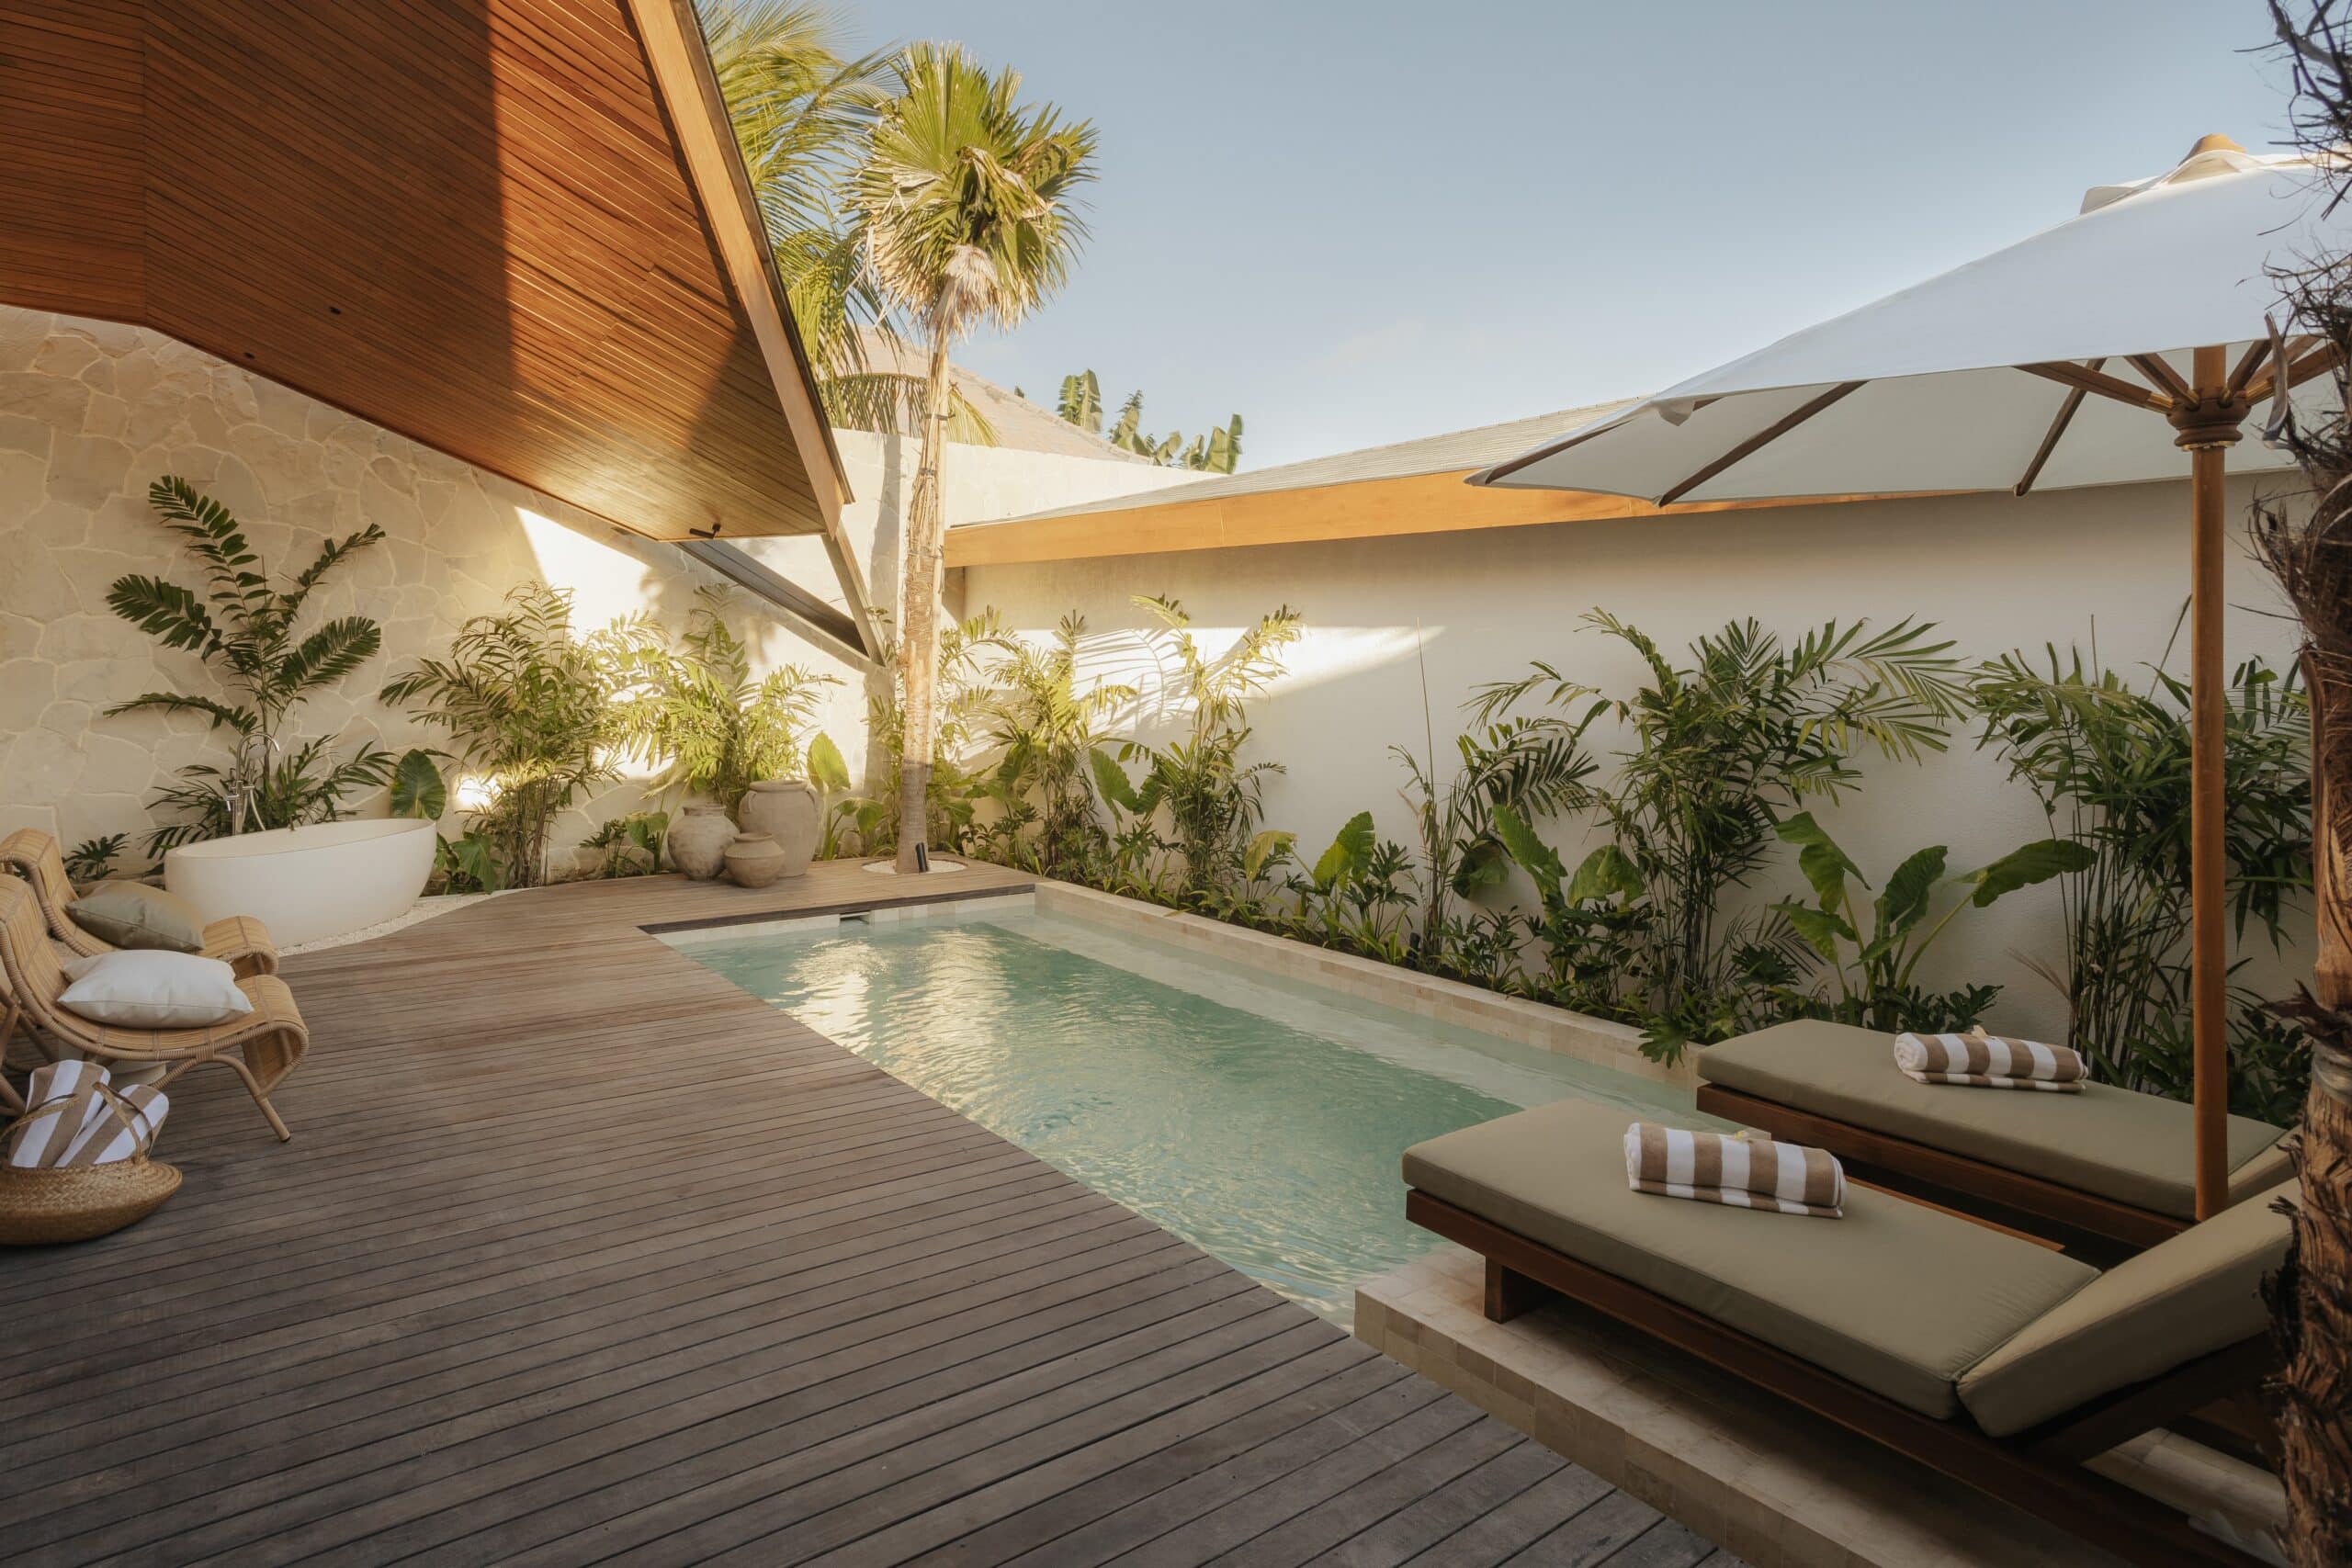 Sage Villas - Modern Tropical Design - Bali Architect - Design Assembly